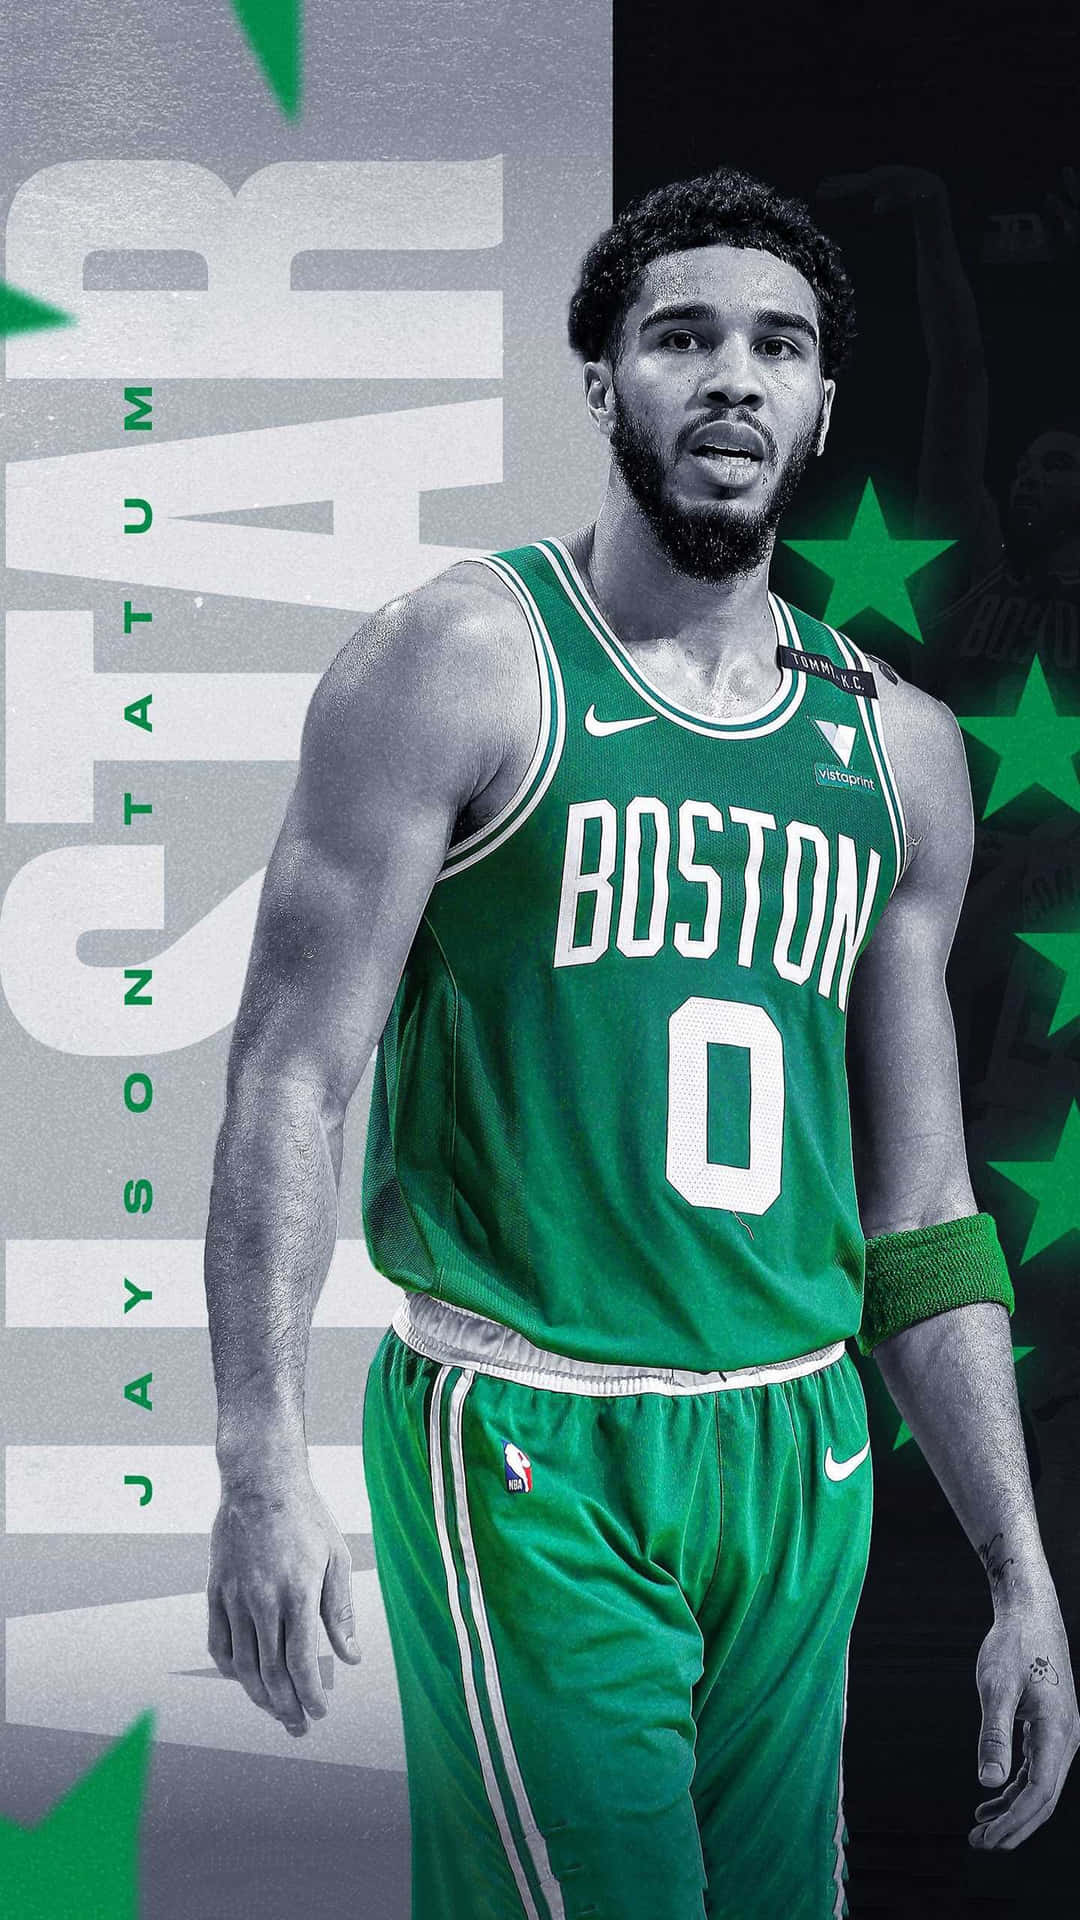 The iconic Boston Celtics in action